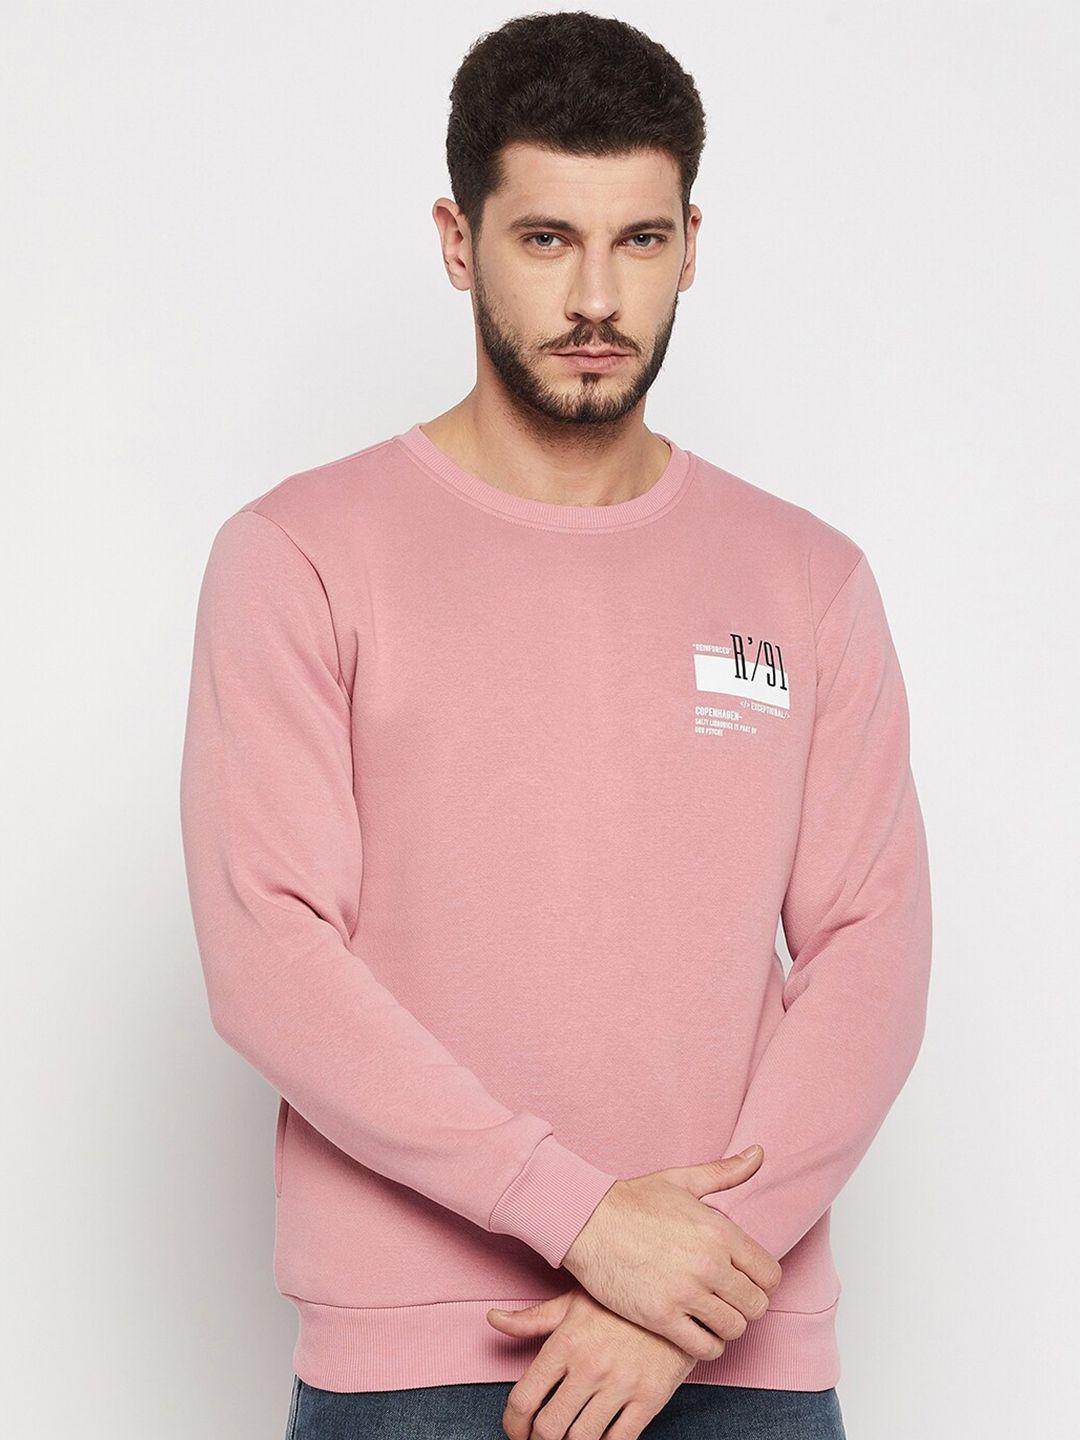 qubic-men-pink-cotton-sweatshirt